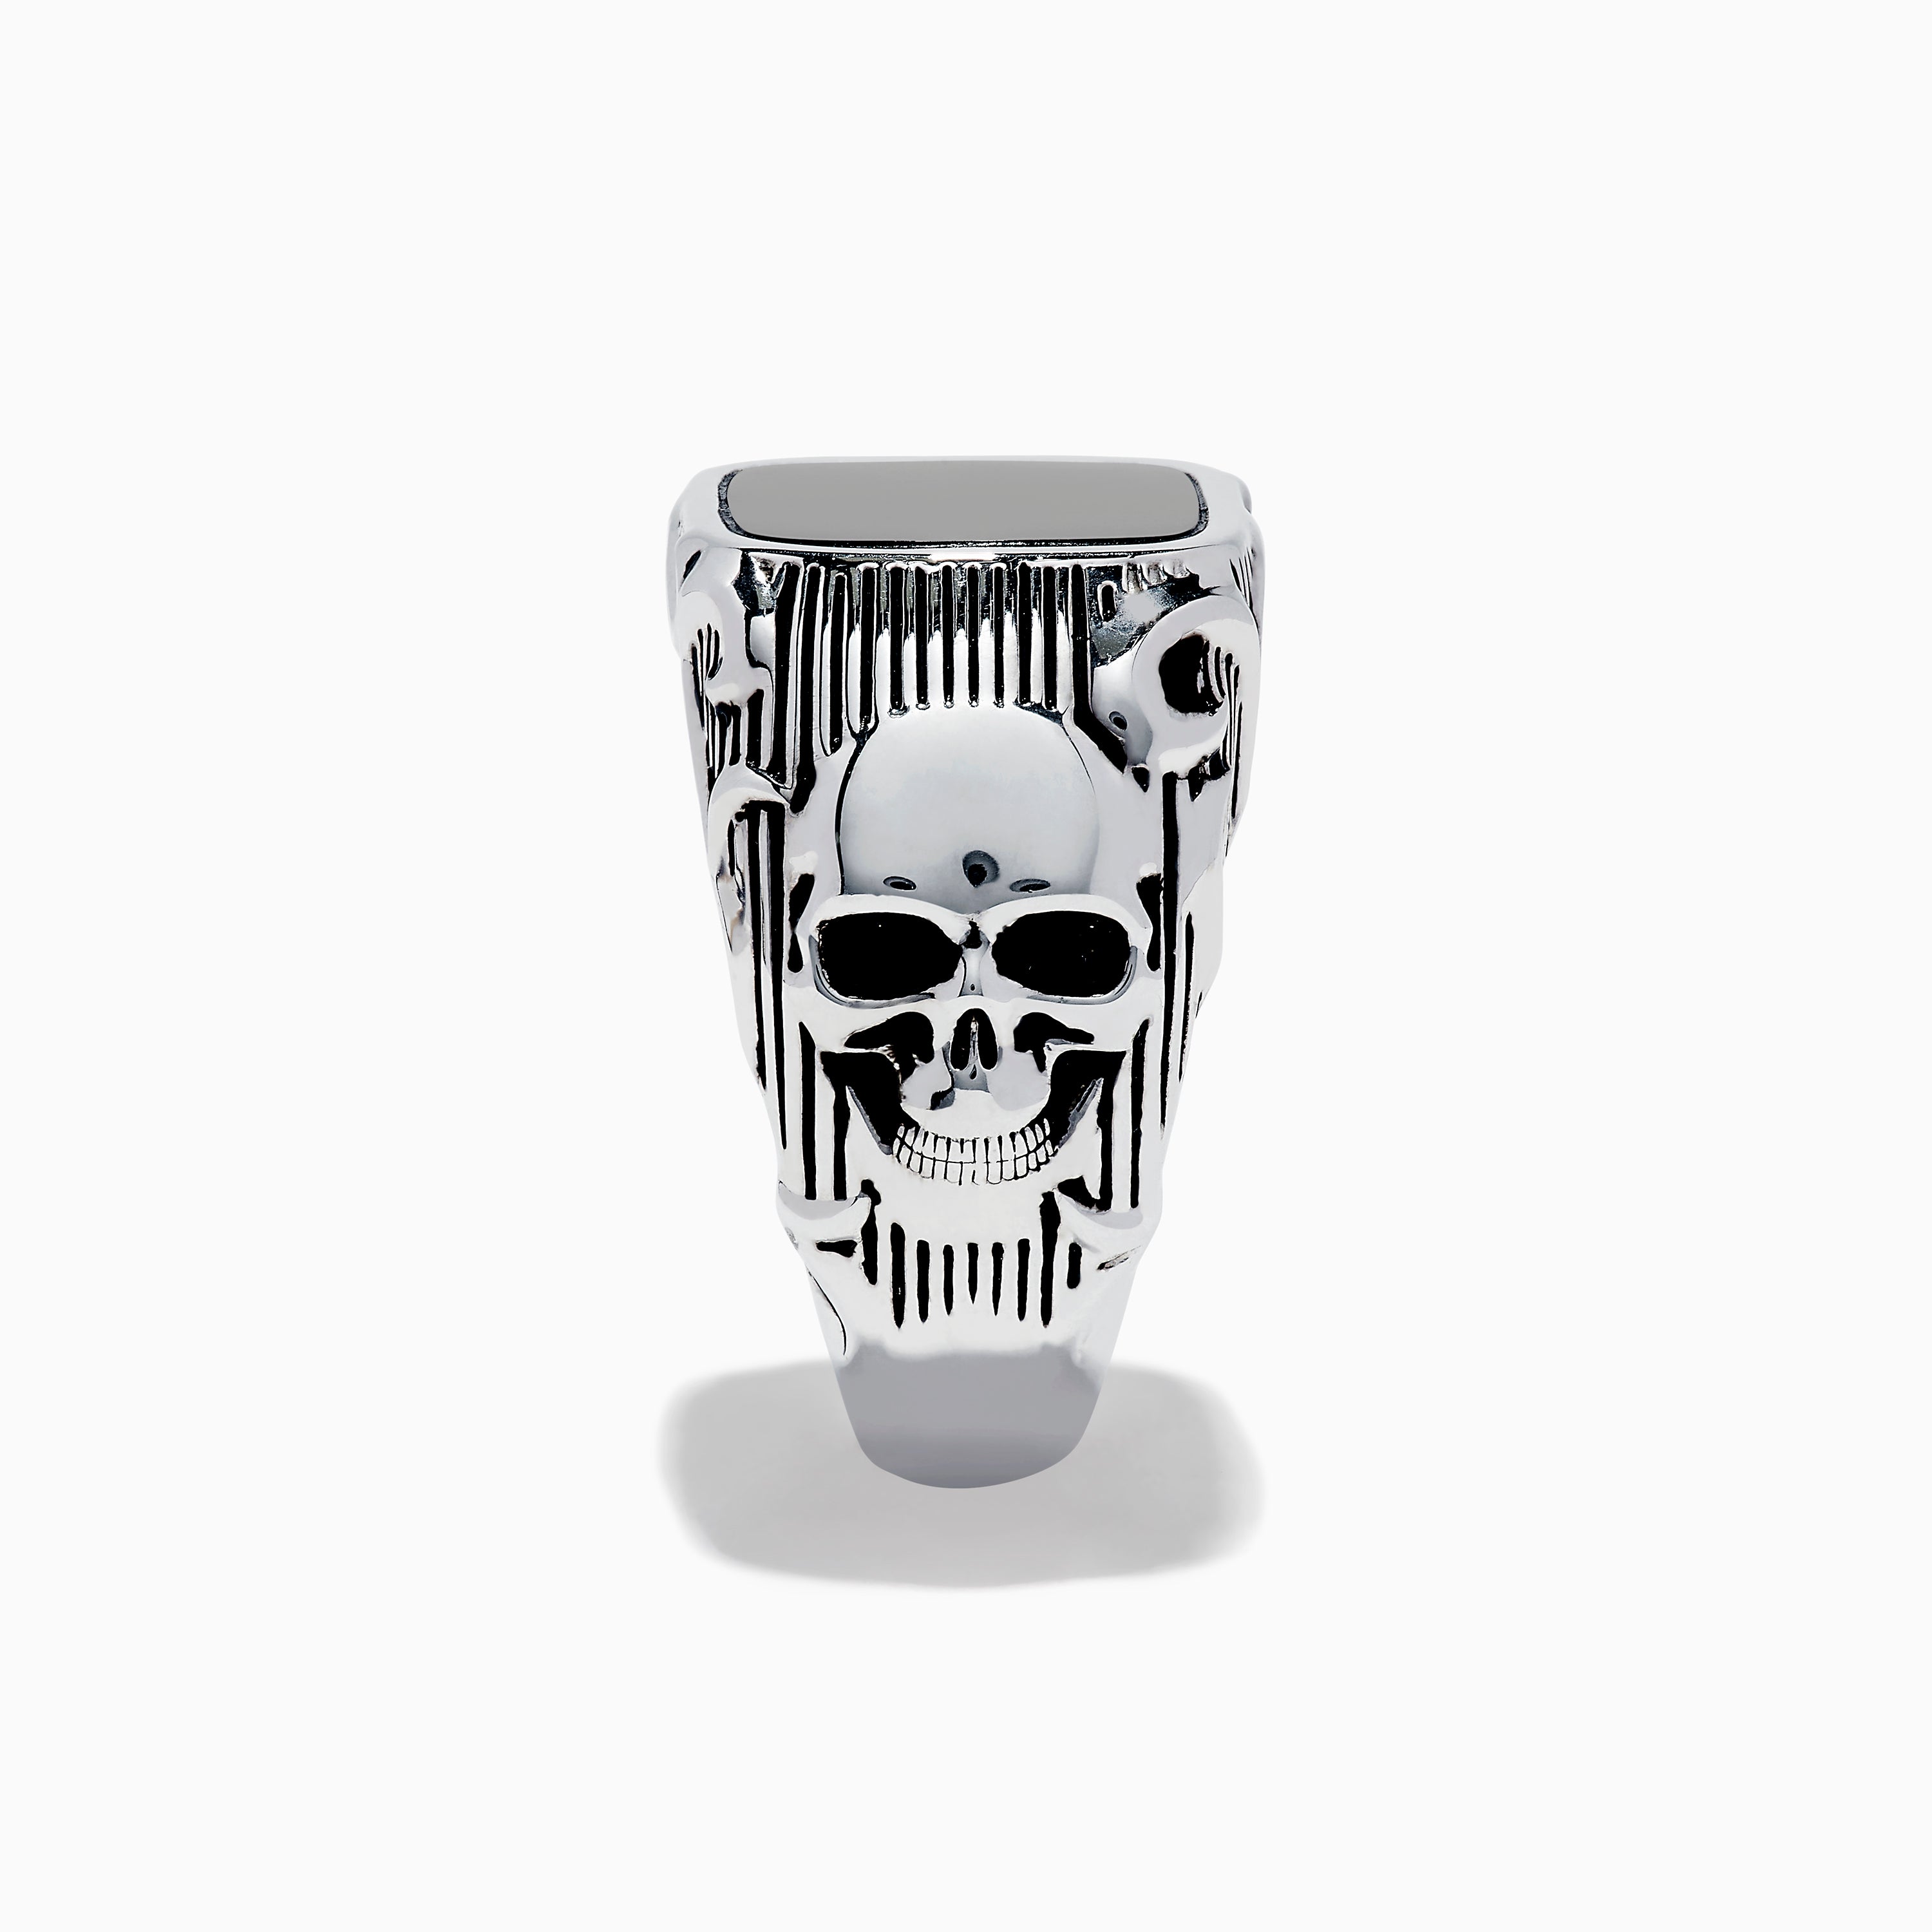 Effy Men's 925 Sterling Silver Onyx Skull Ring